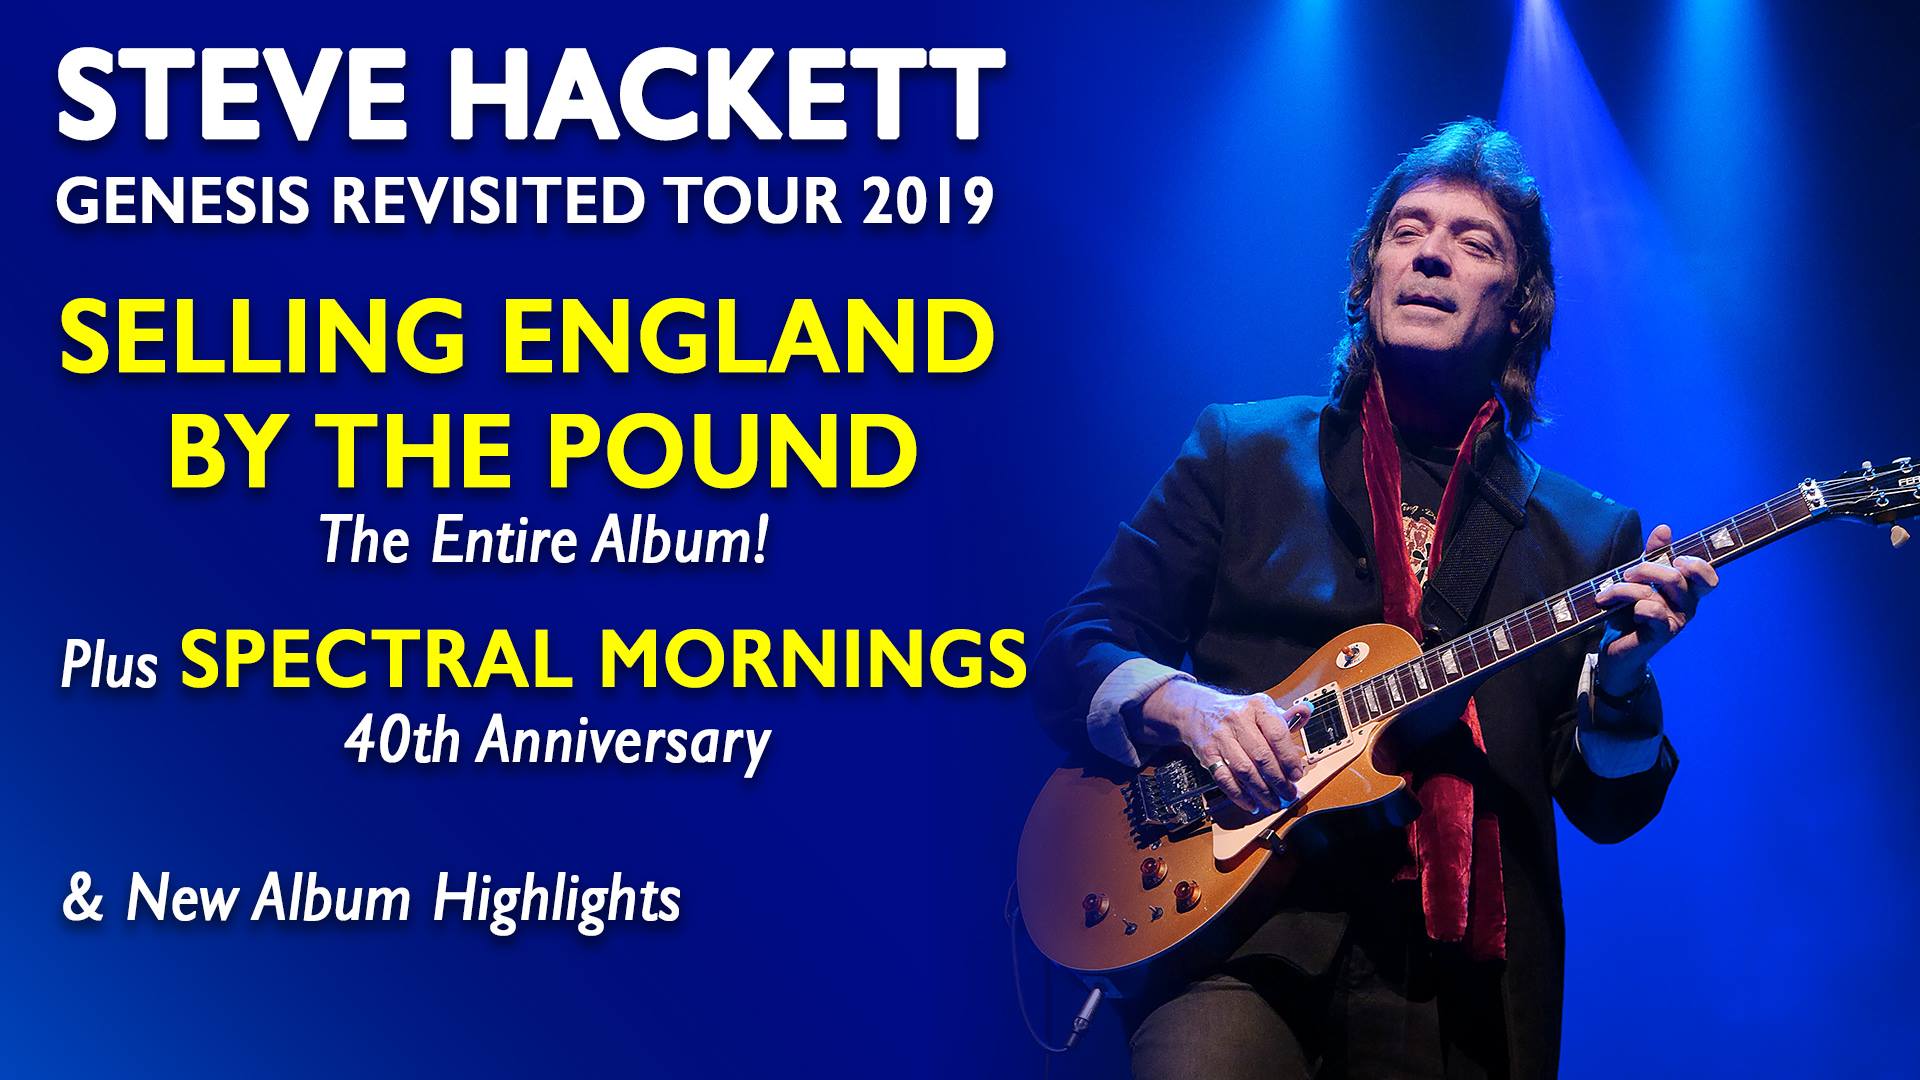 Steve Hackett 2019 tour!